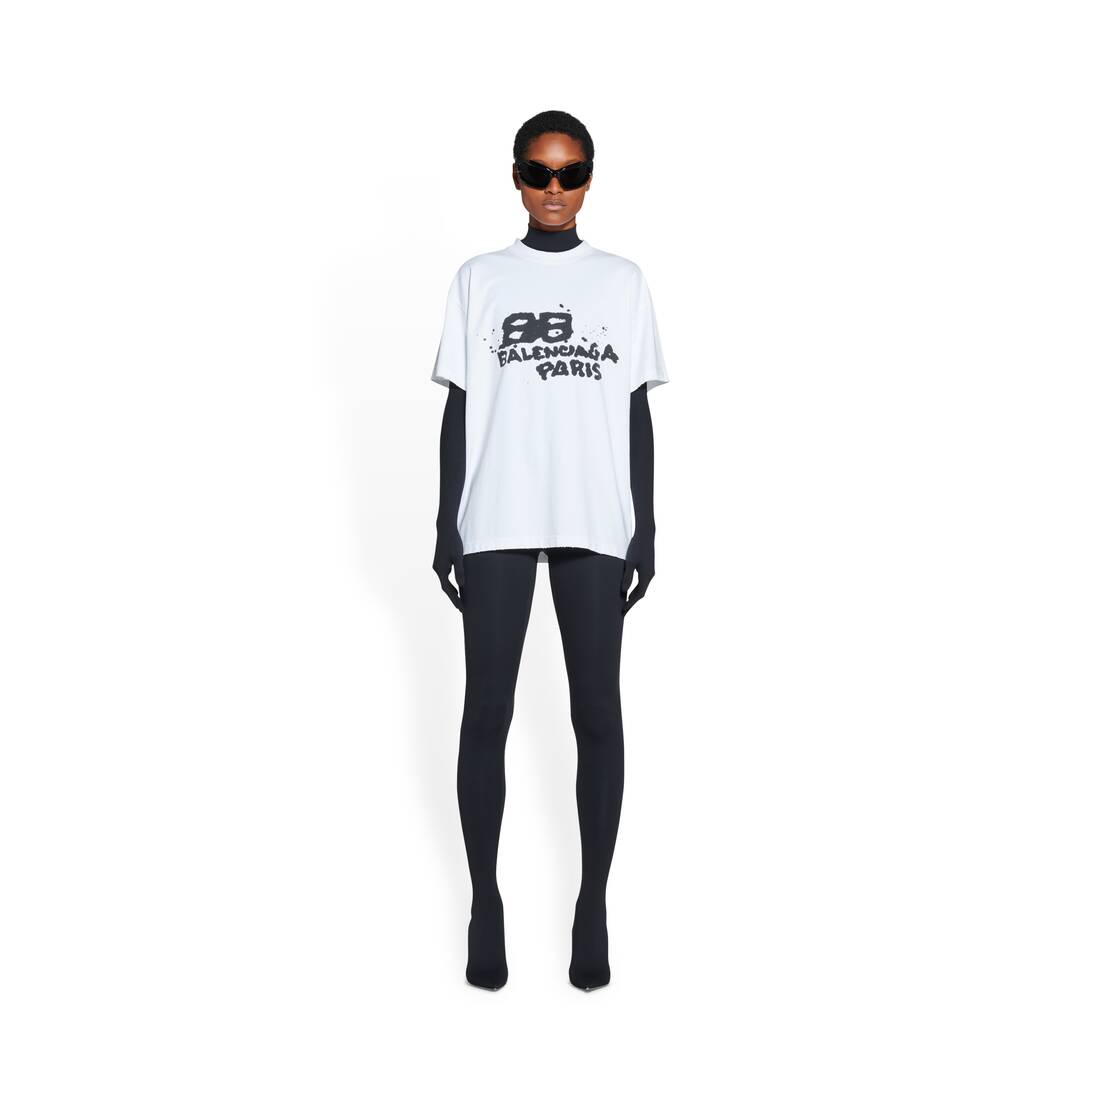 Balenciaga Black Cotton Logo Printed Crew Neck Unisex T-Shirt XS